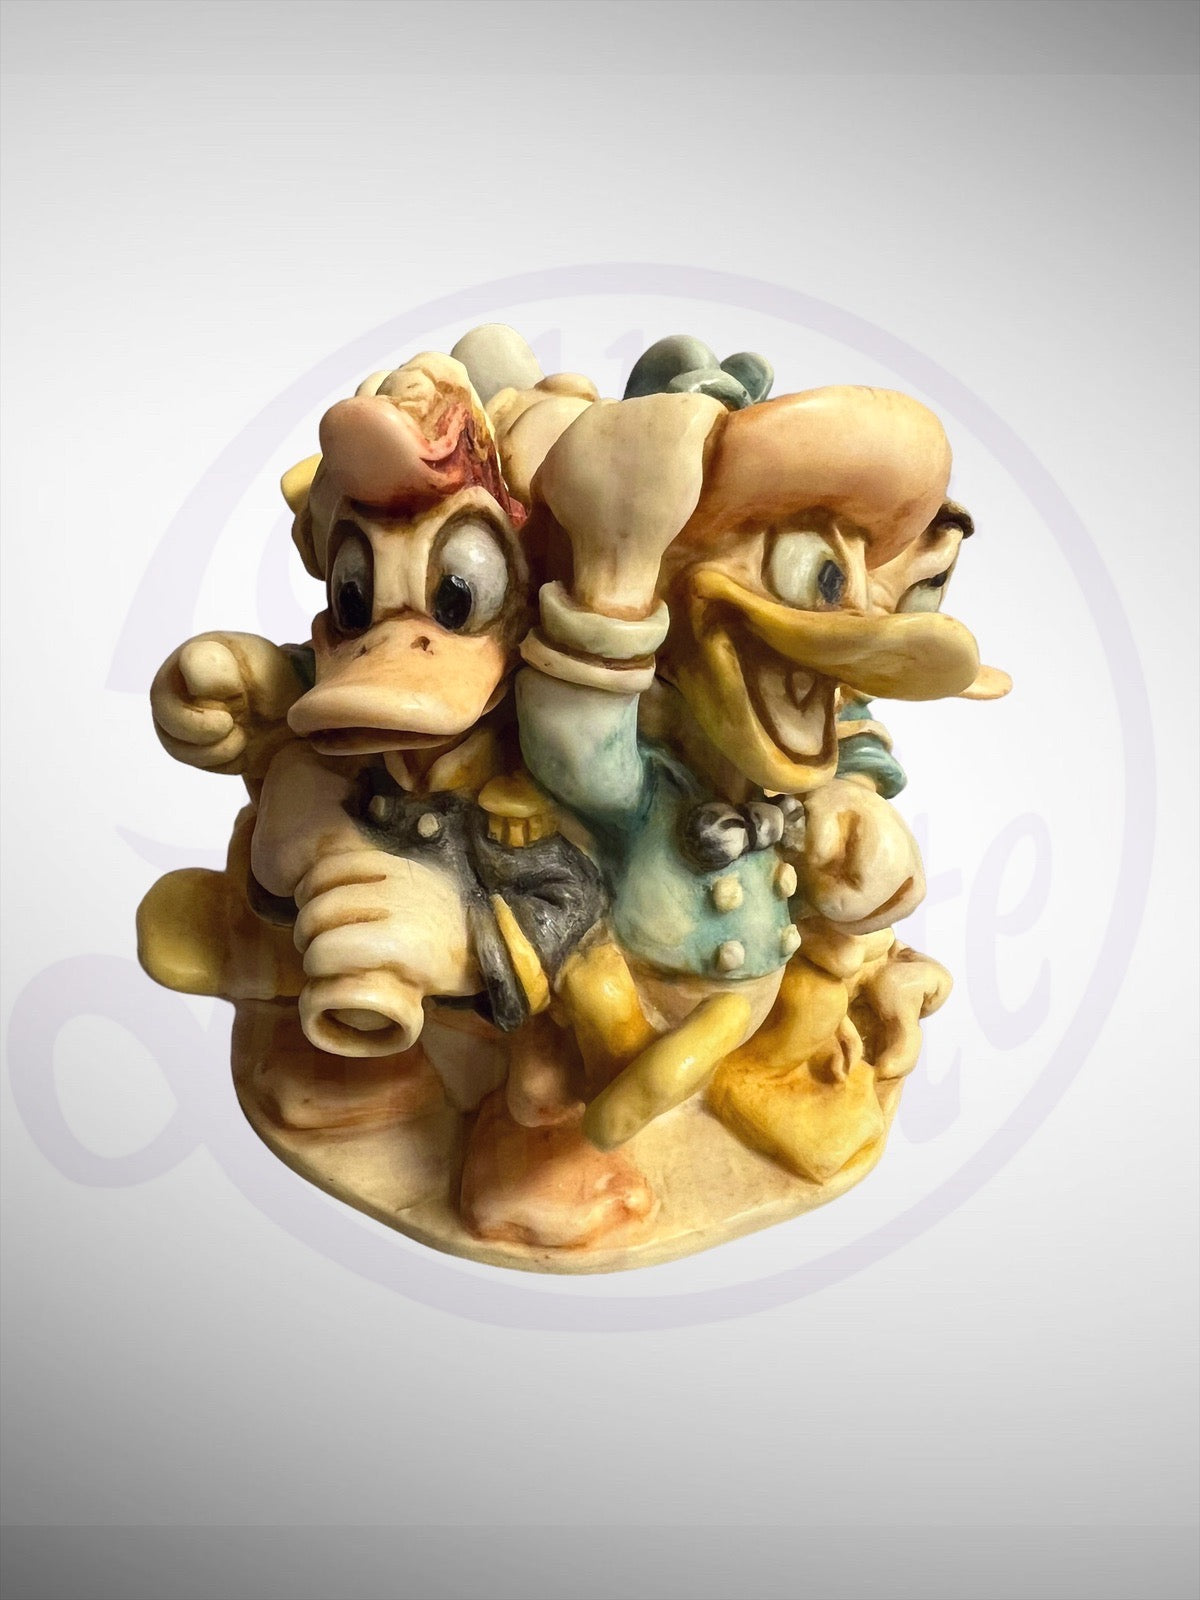 Harmony Kingdom Box - Disney Donald Through the Years Figurine No Box